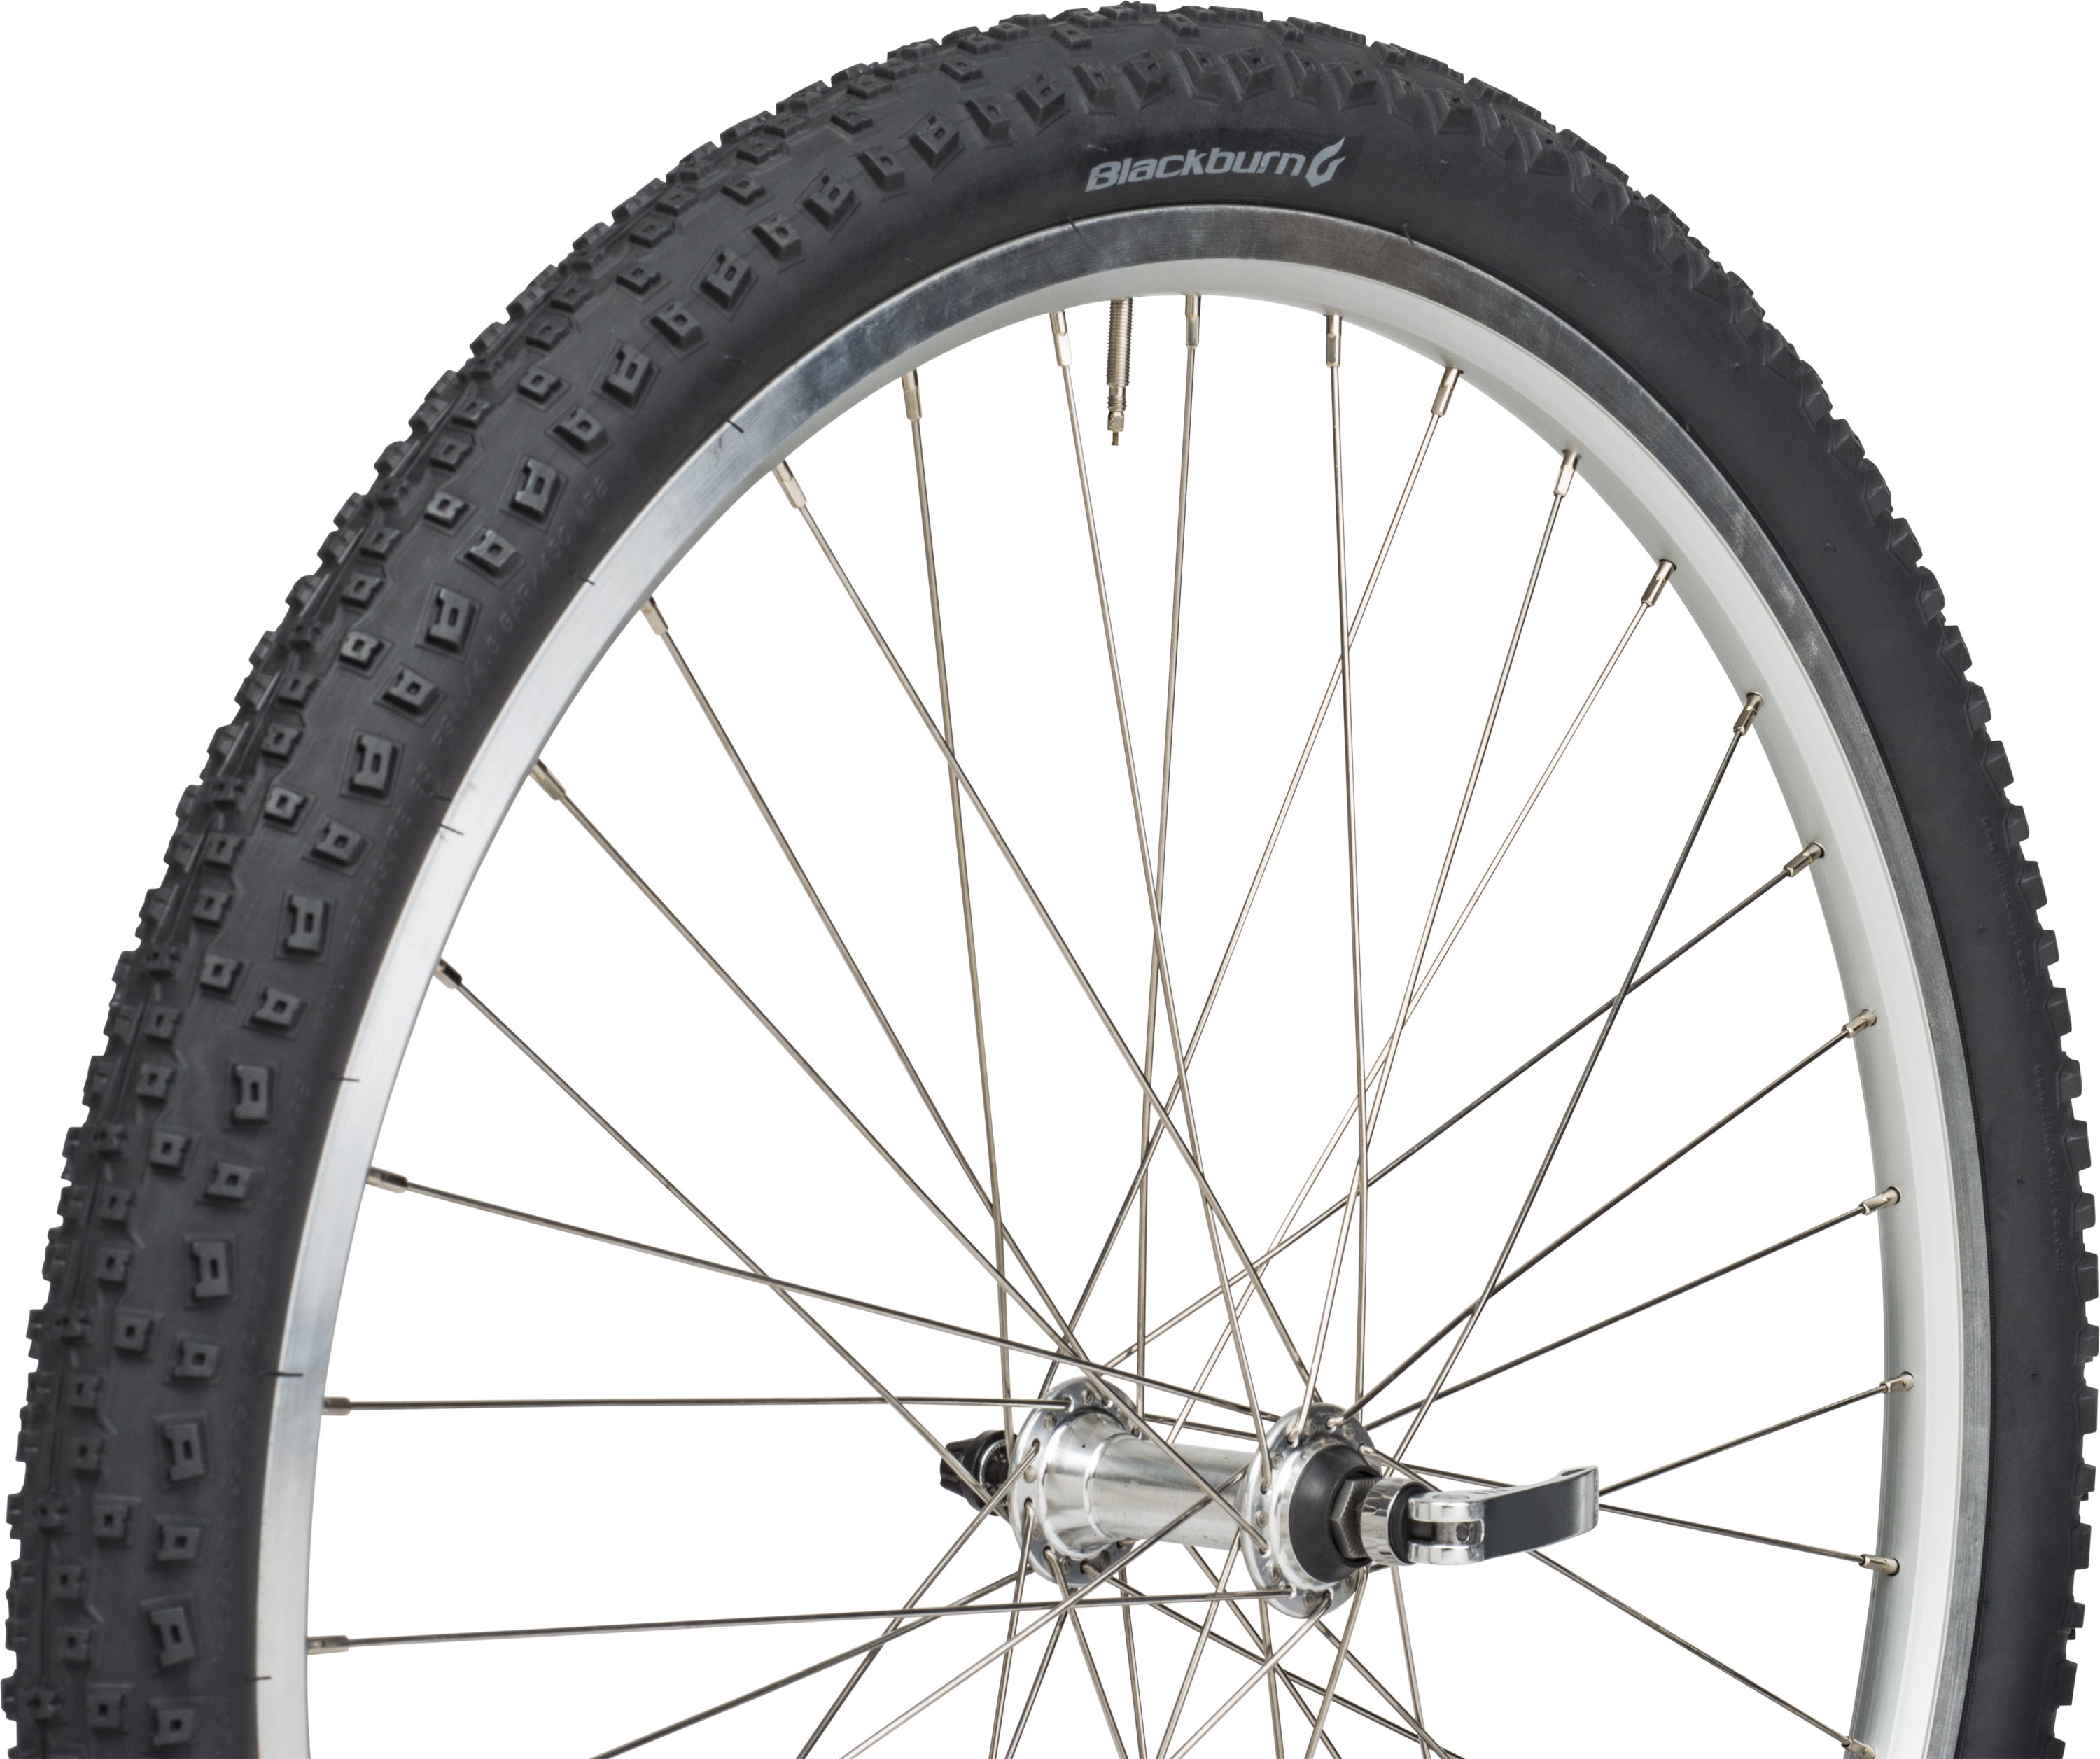 NEW Wanda 24" x 2.10" Bicycle Tire All Black MTB Mountain Road Bike 